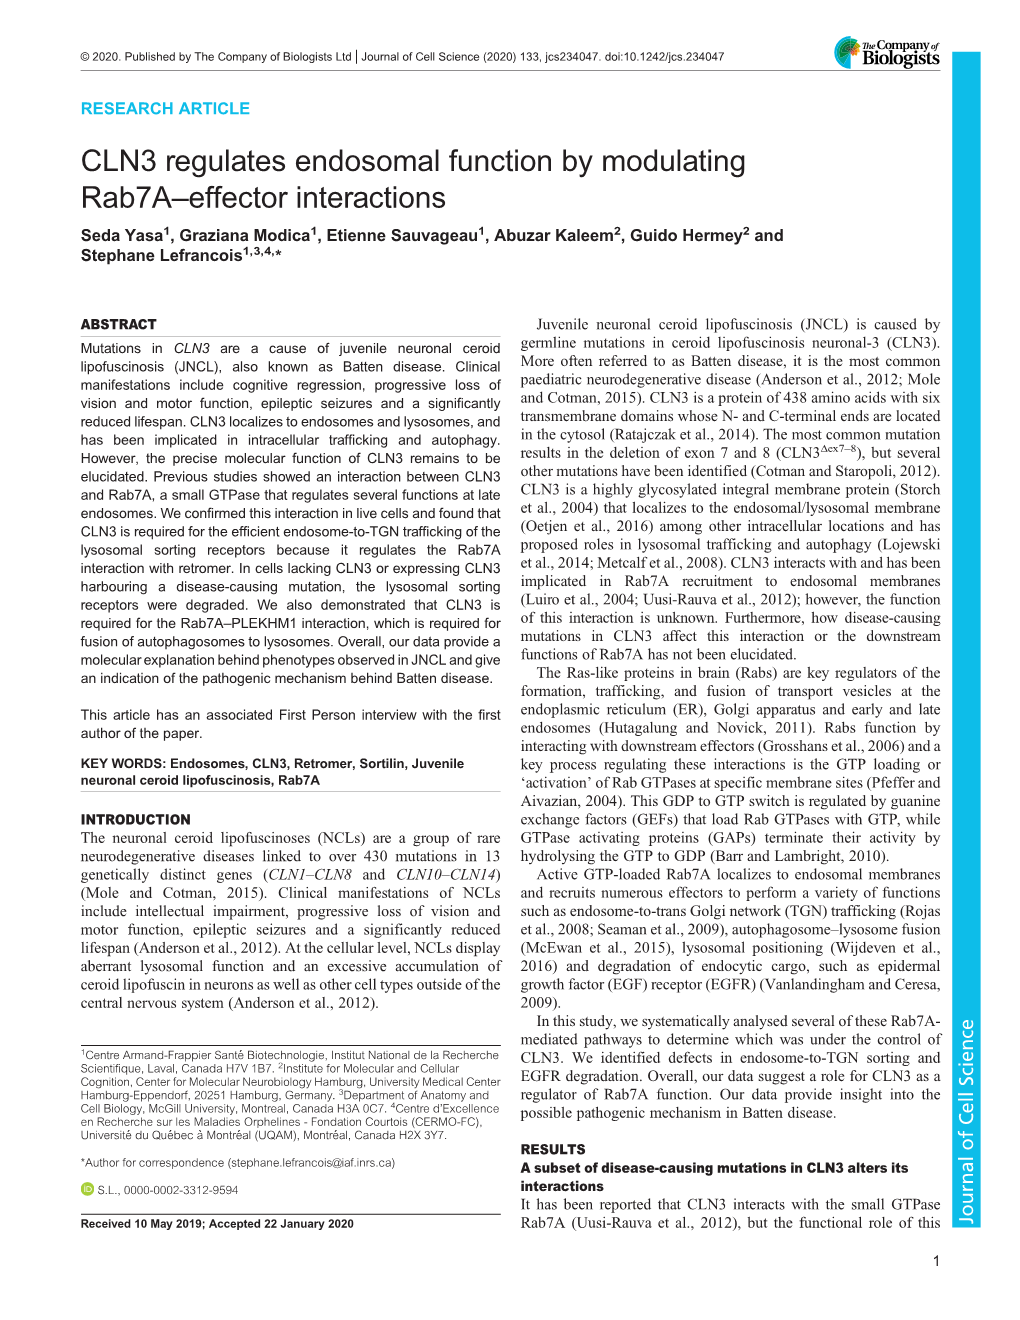 CLN3 Regulates Endosomal Function by Modulating Rab7a–Effector